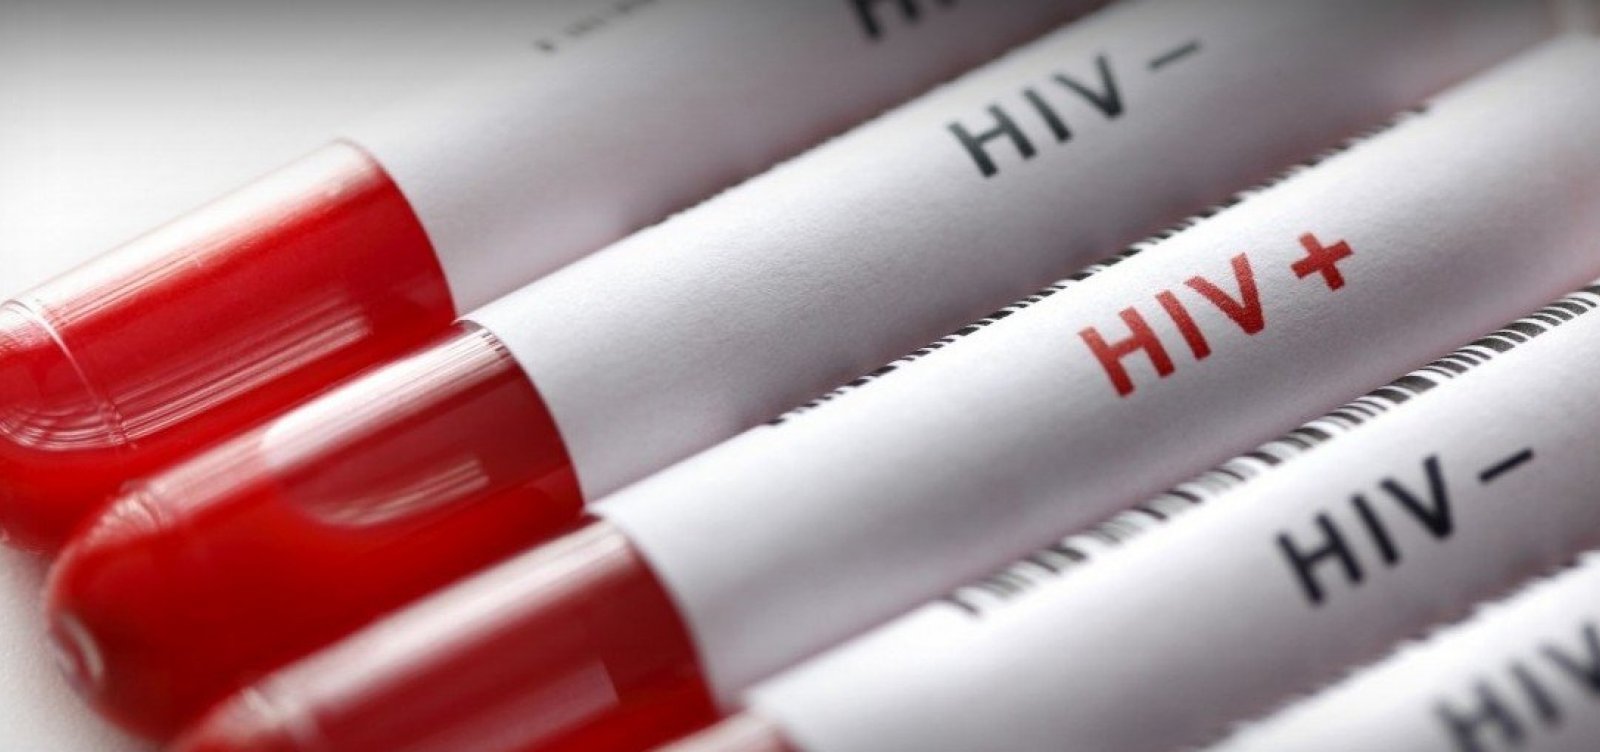 Nova vacina contra o vírus HIV apresenta bons resultados